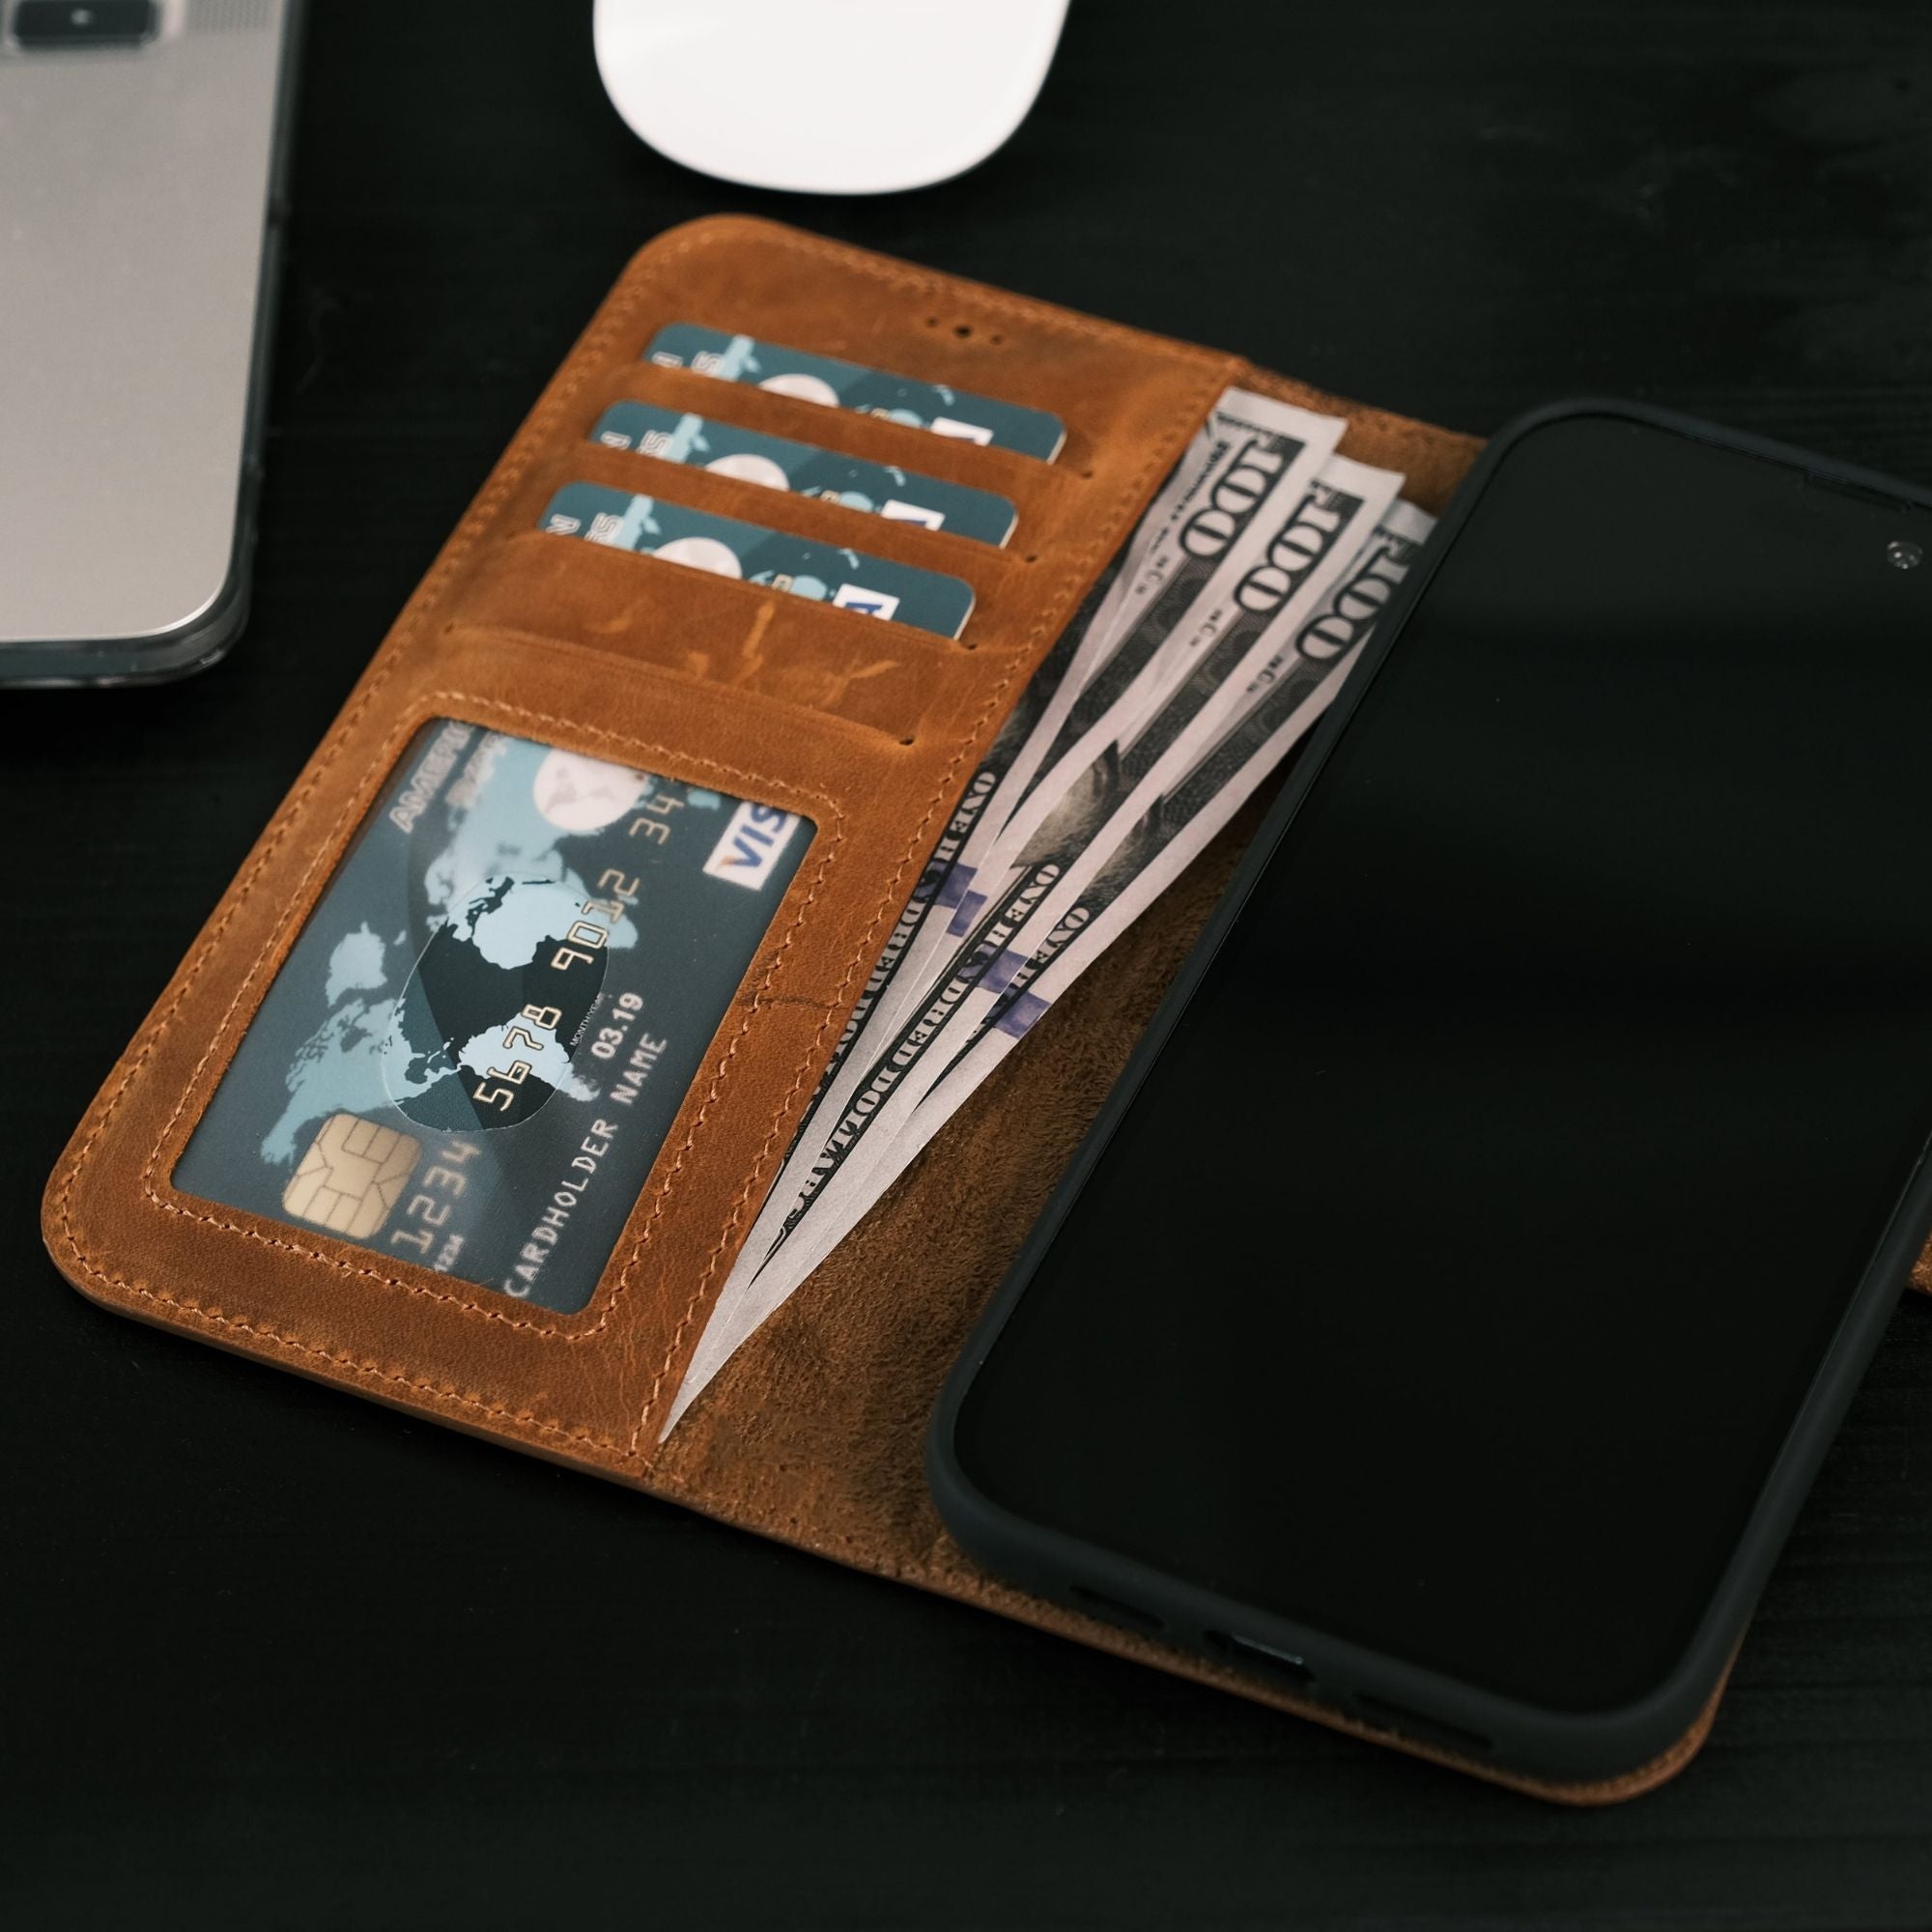 Folio 2-in-1 iPhone Wallet w/ Detachable Folding Card Holder Case